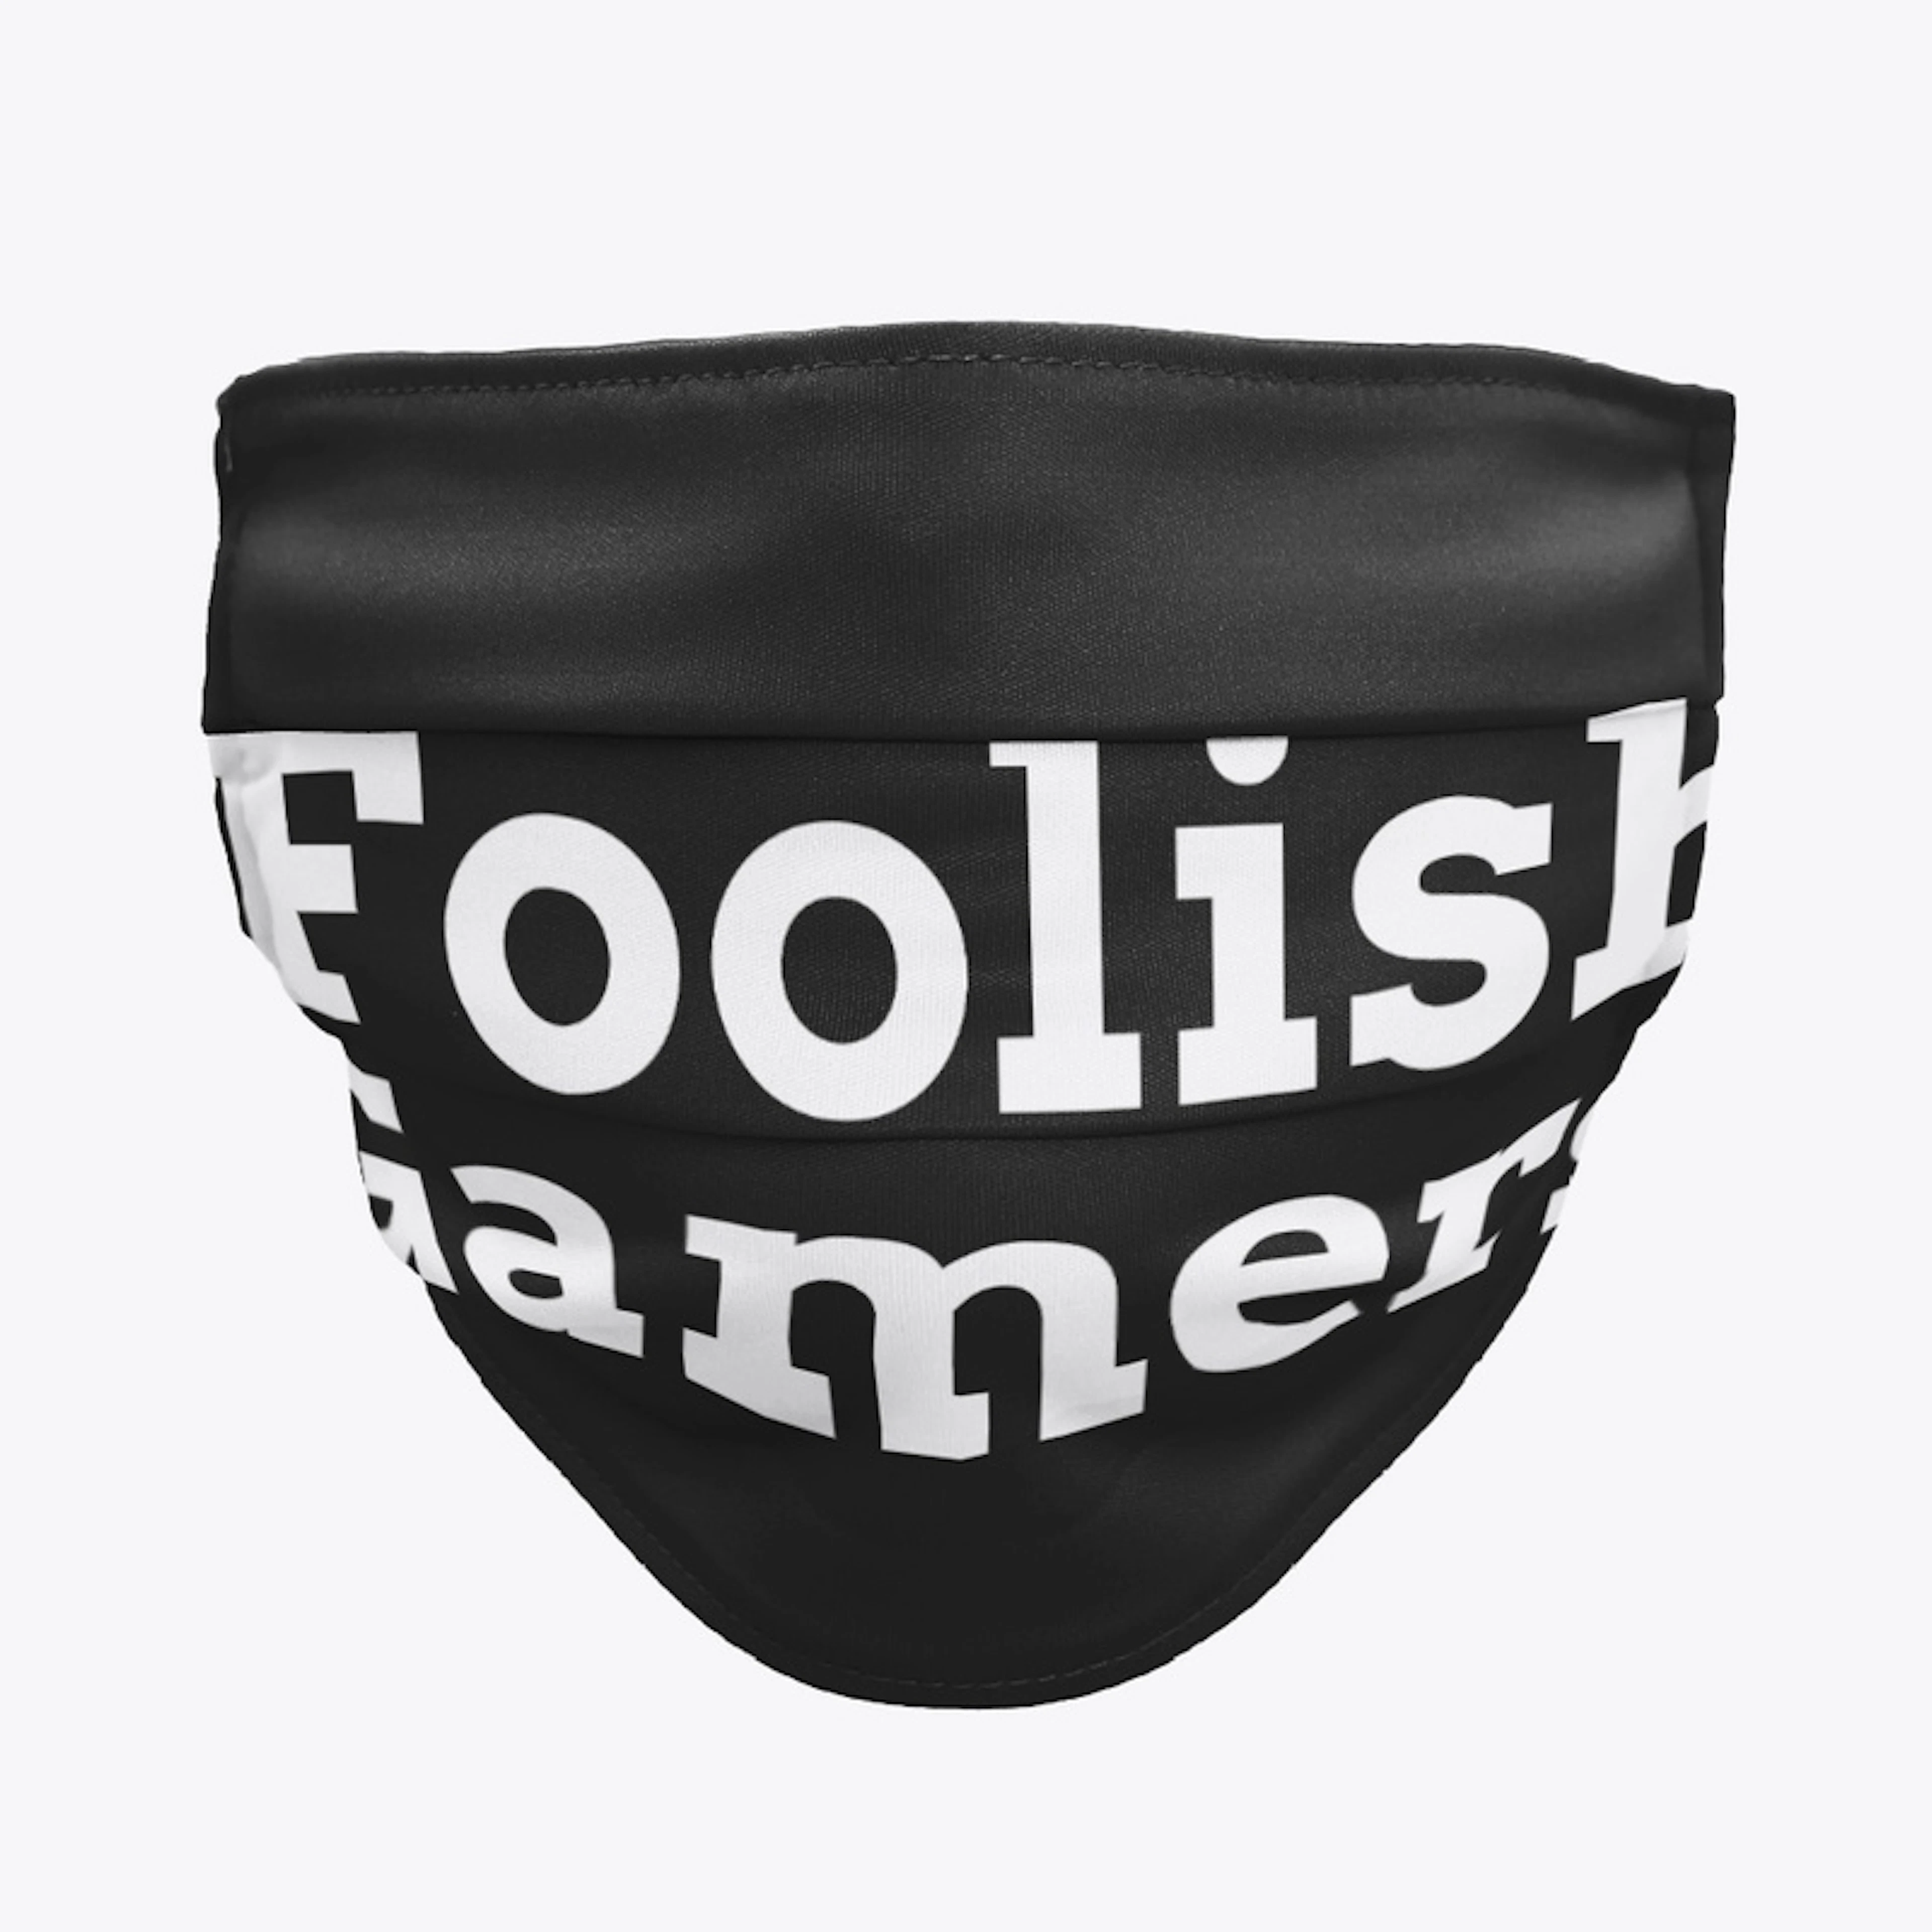 Foolish Gamers Merch Logo